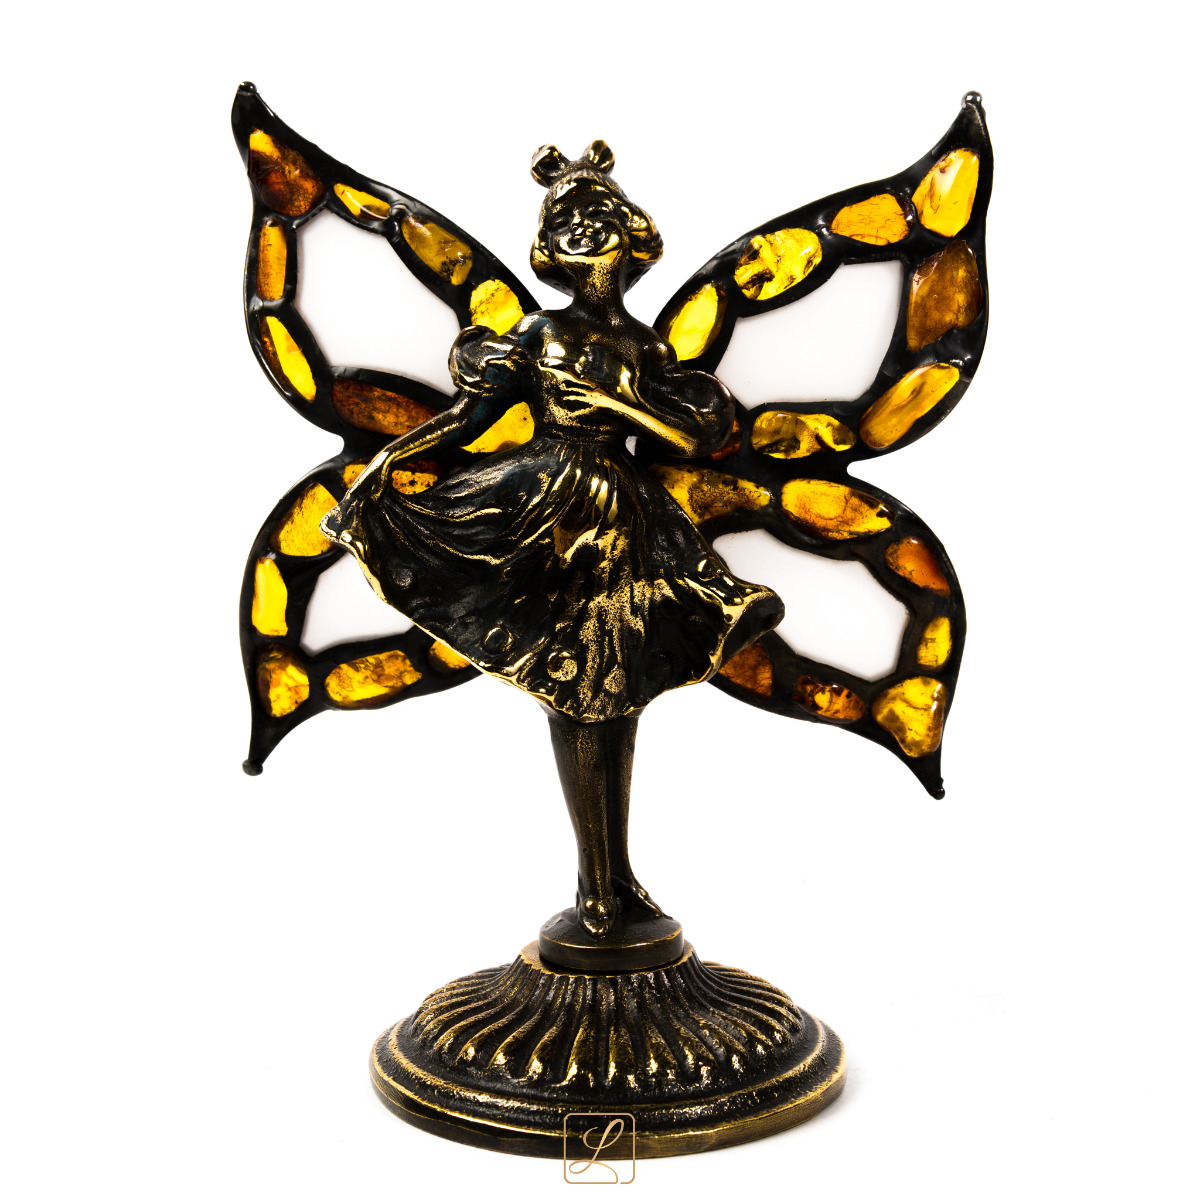 Maiden figurine MOTYL amber, cast brass. A beautiful, tasteful gift